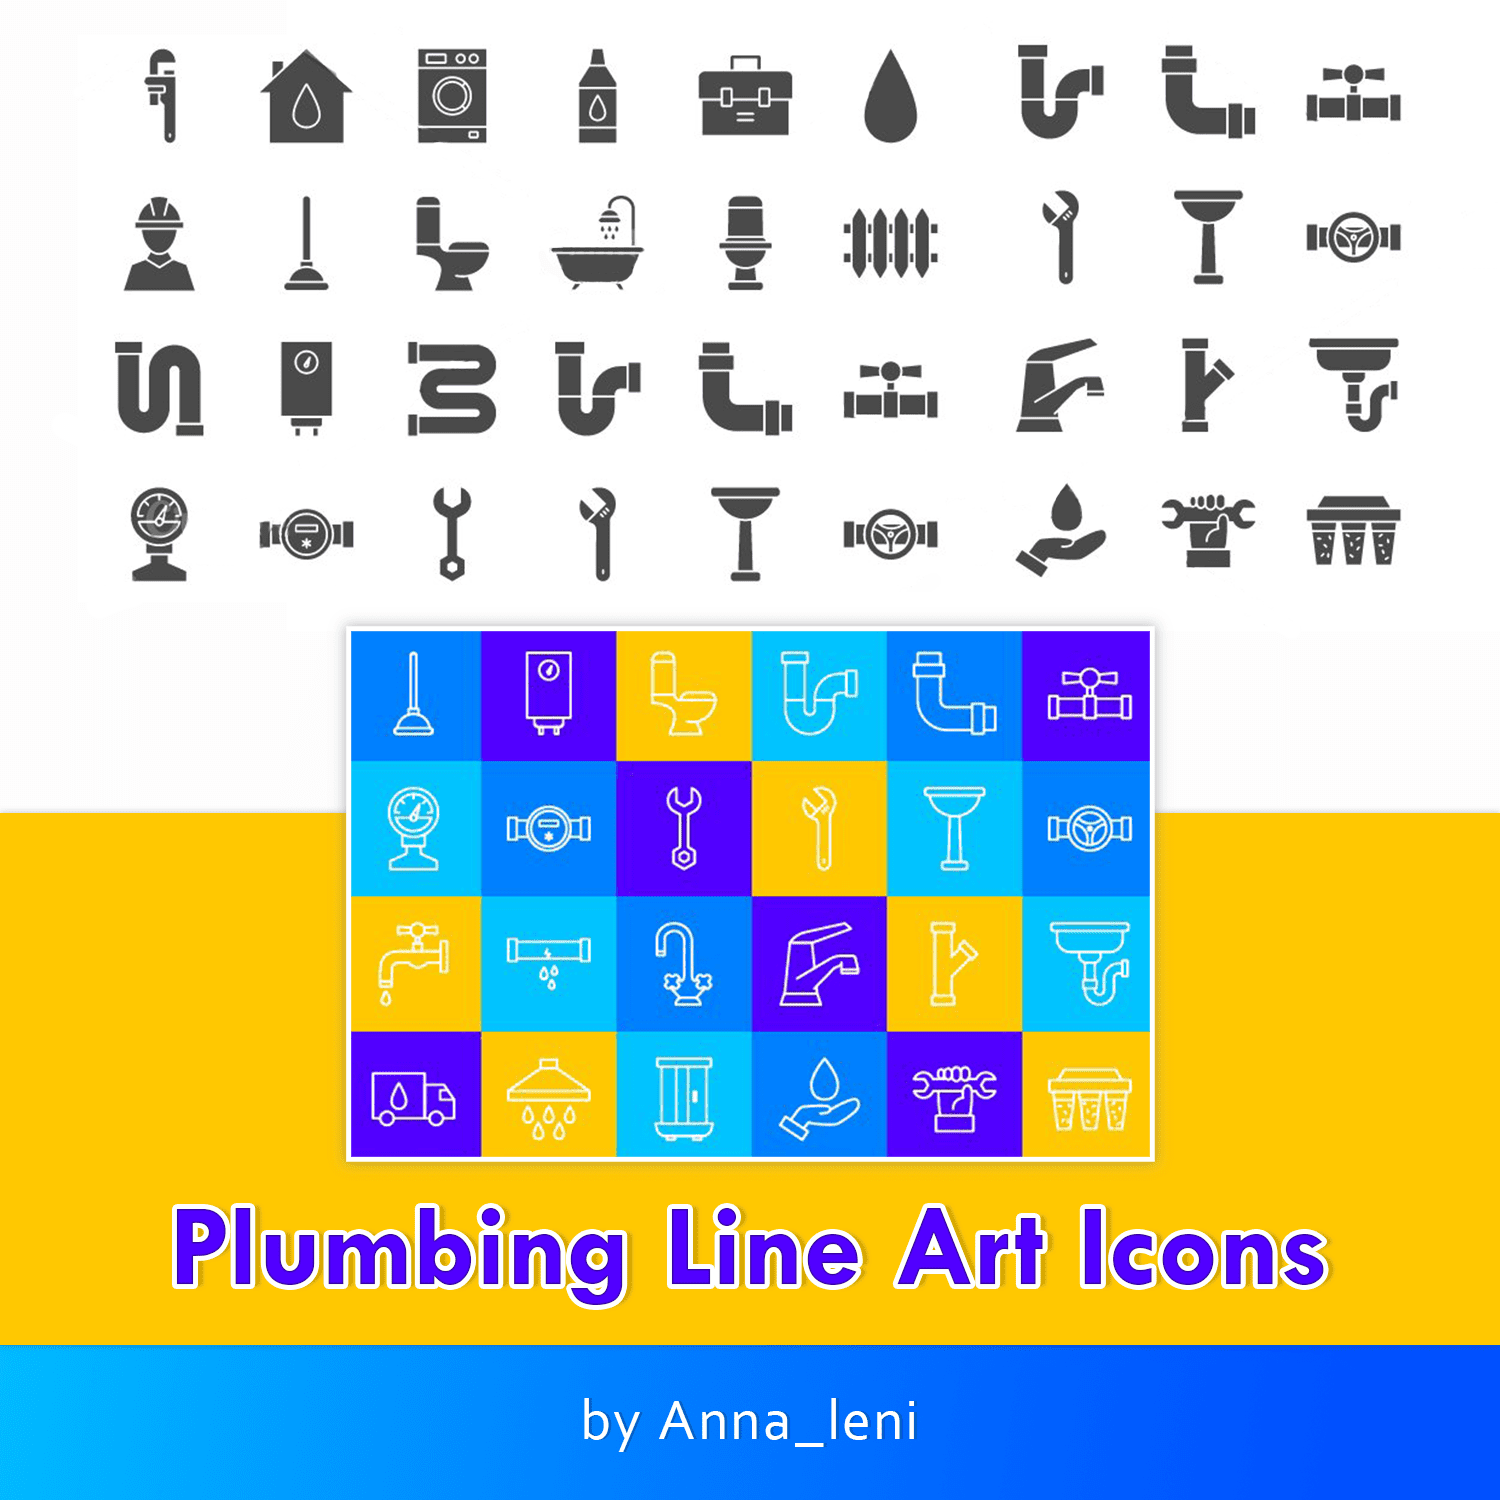 Plumbing Line Art Icons cover.